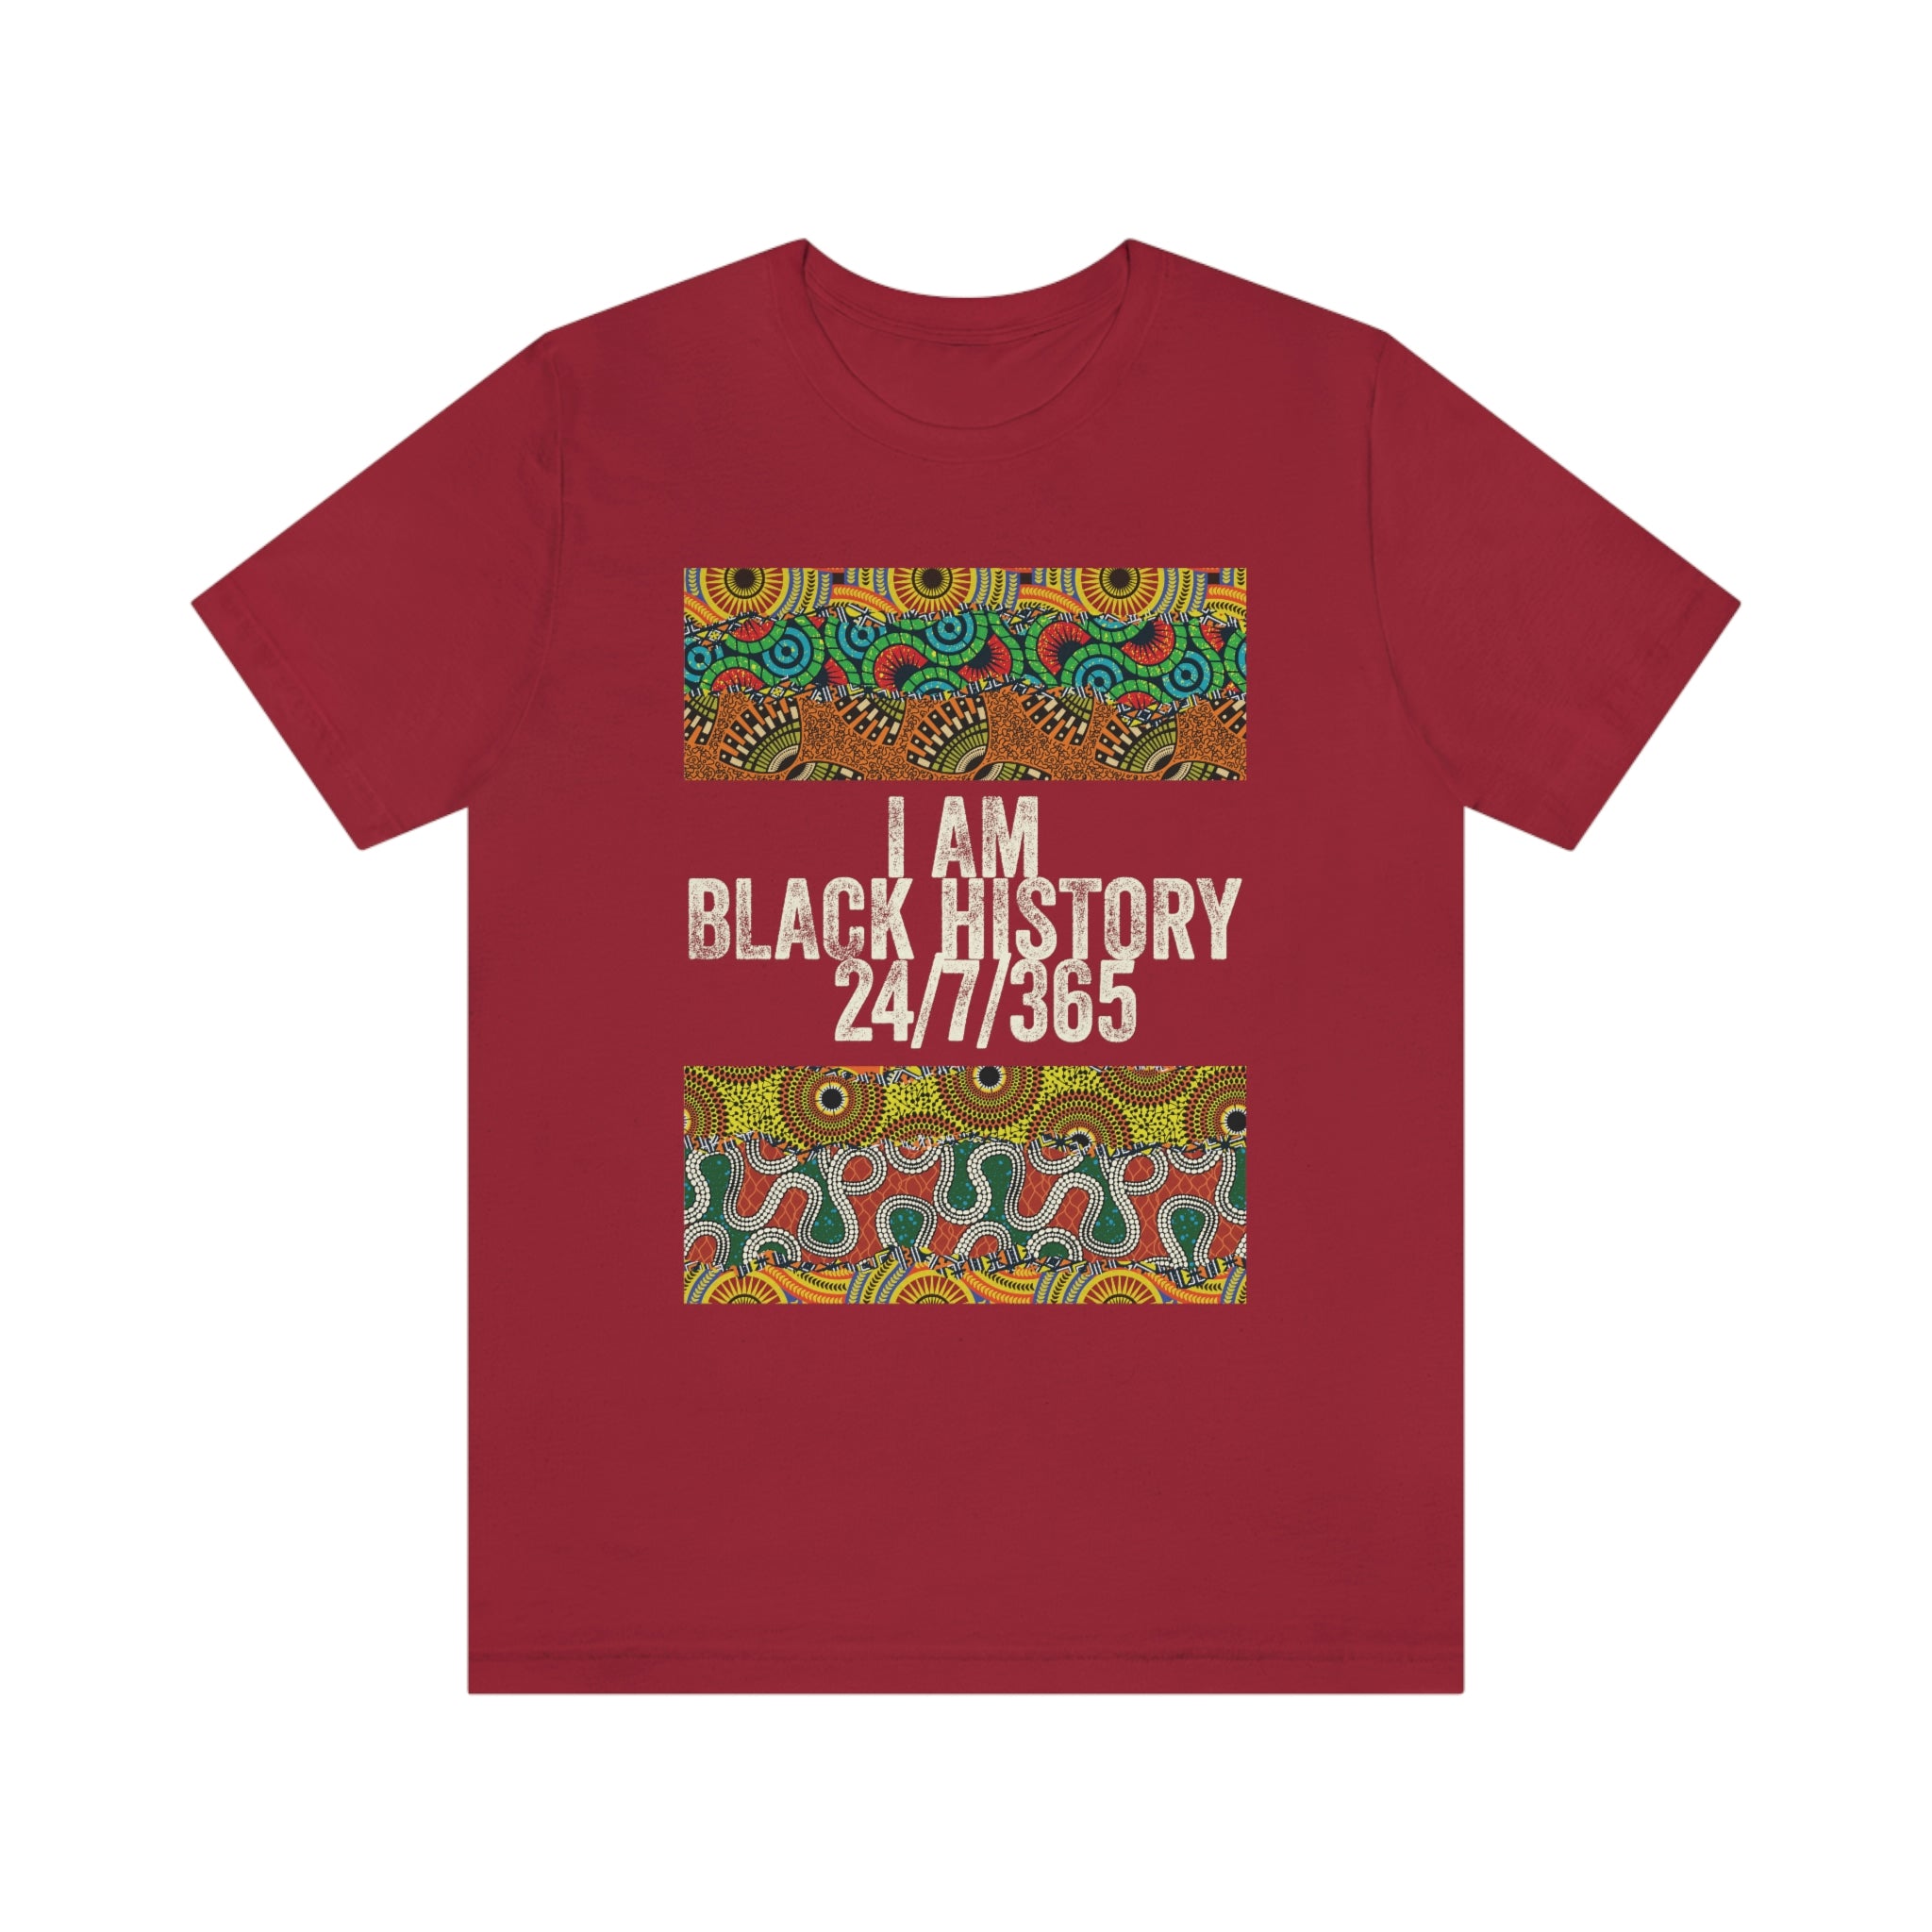 I Am Black History T-shirt